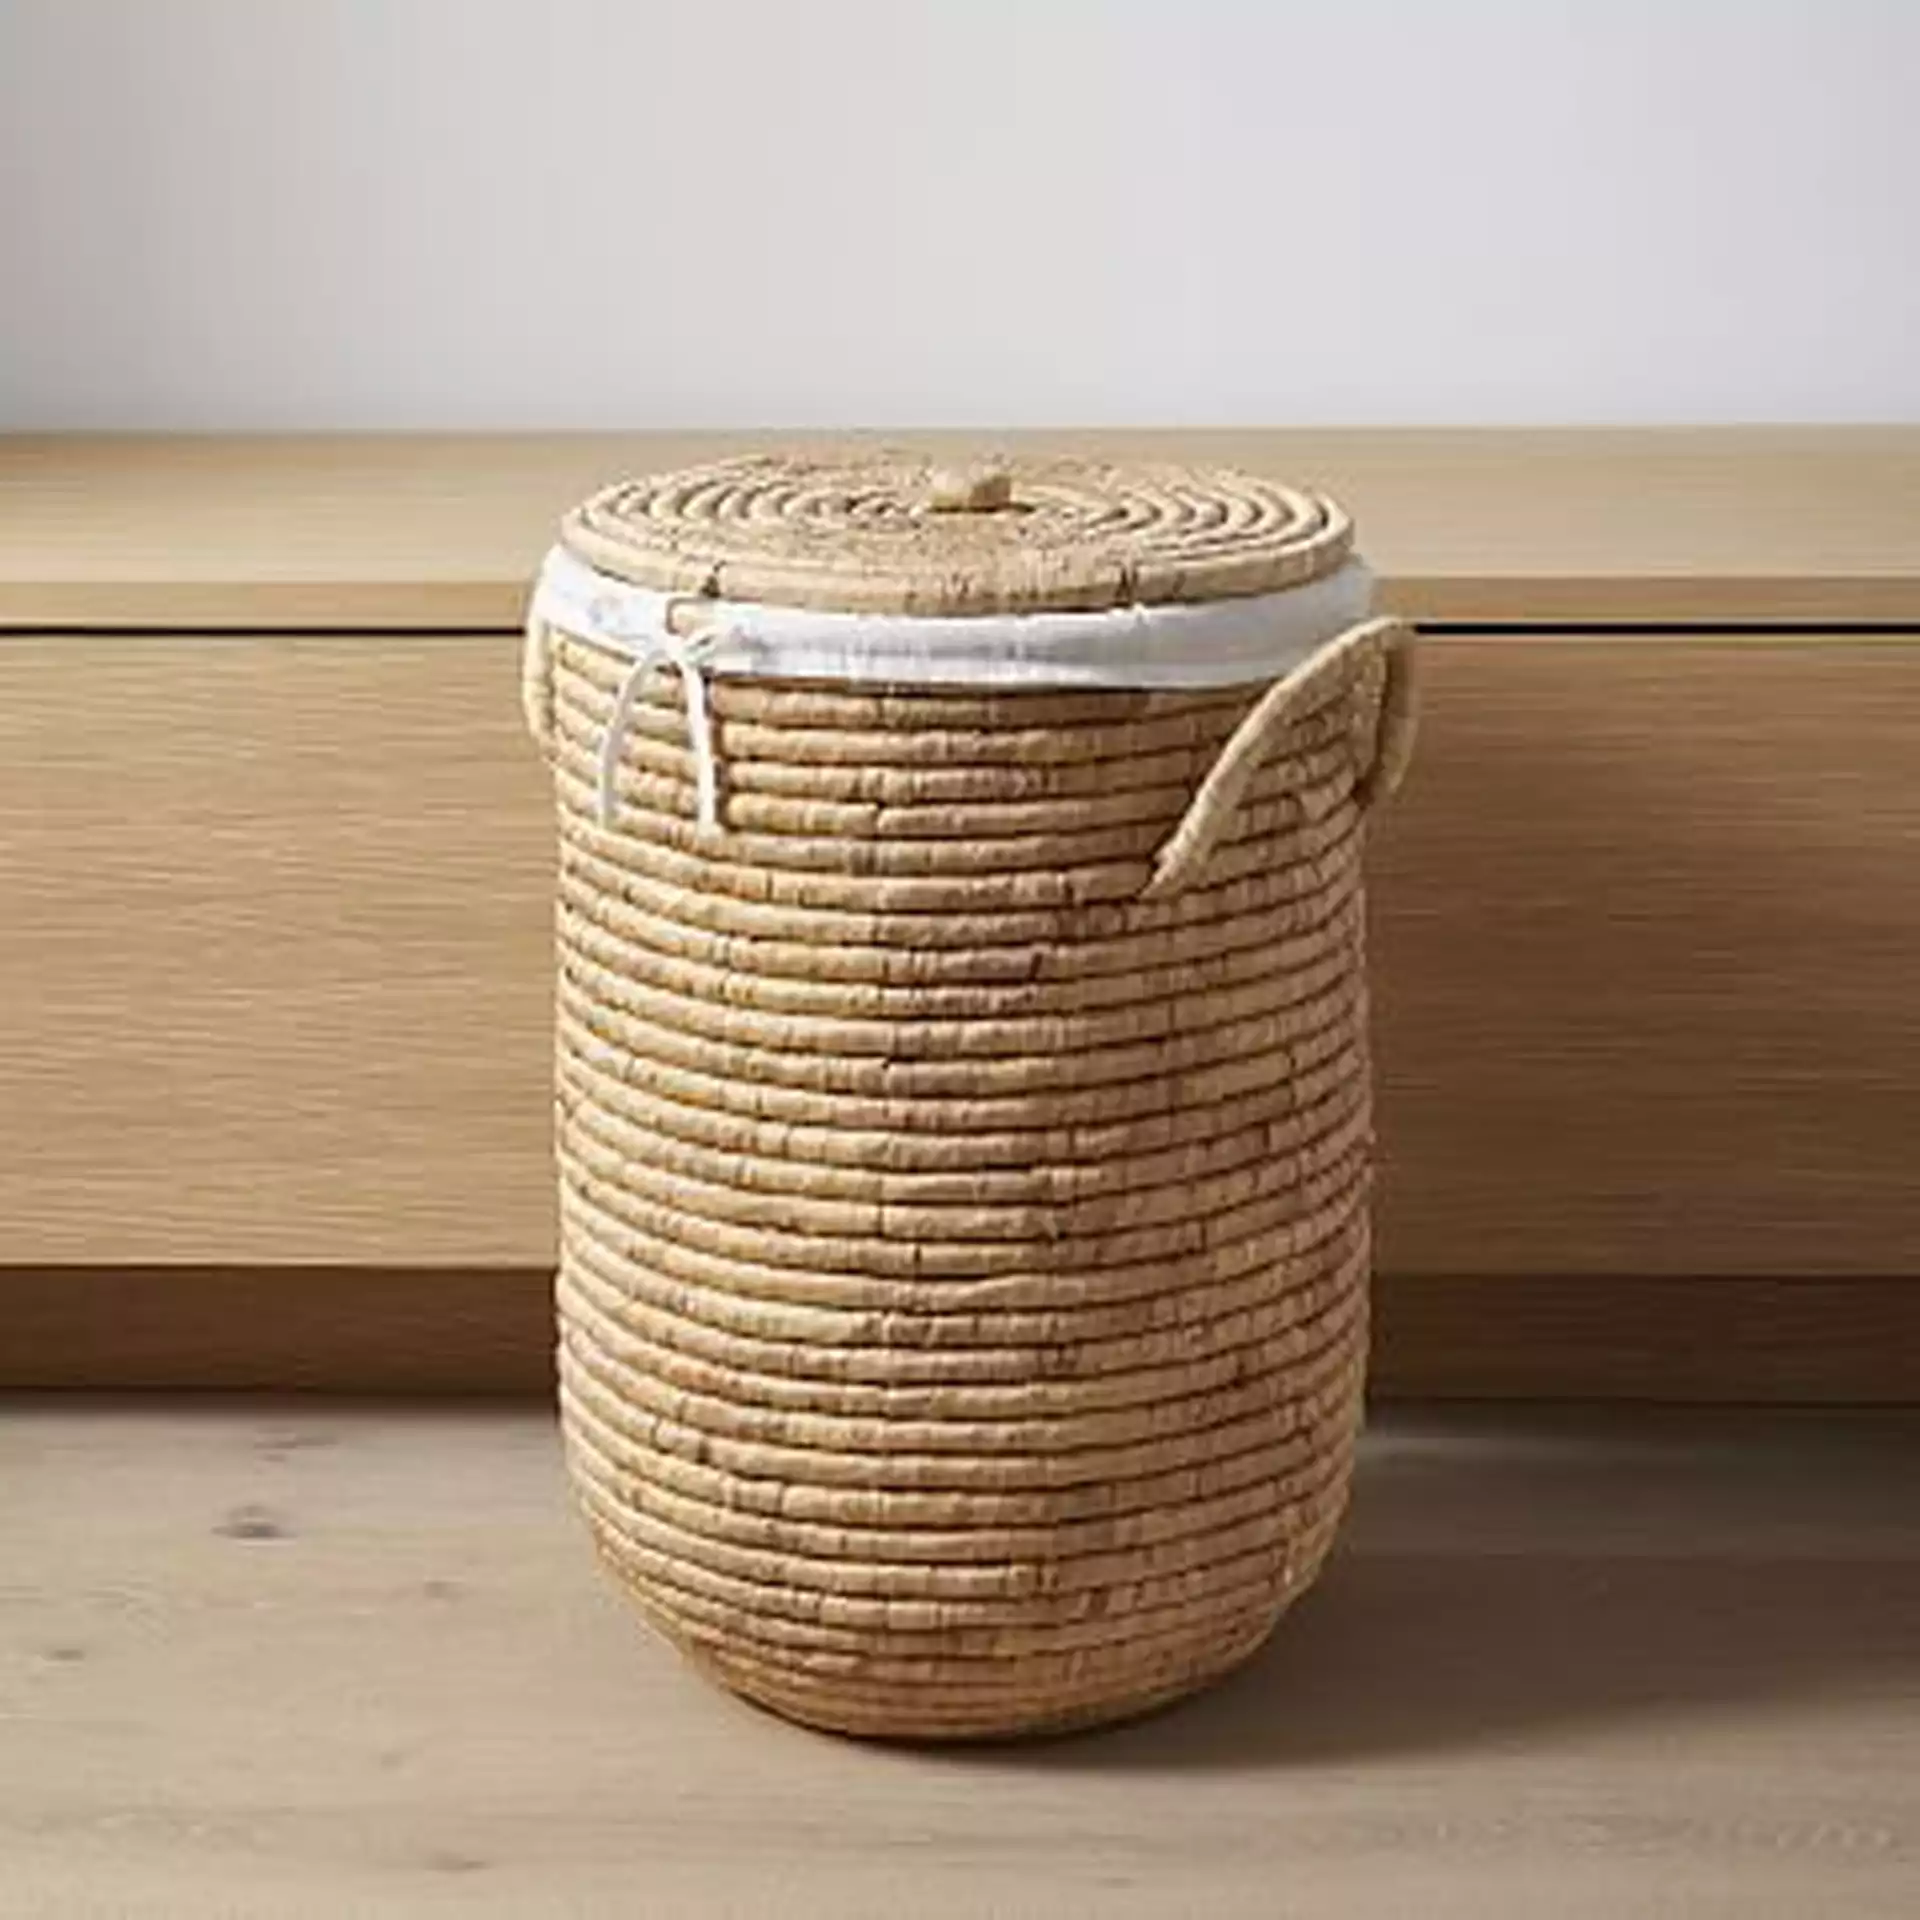 Woven Seagrass Basket, Small Hamper, Natural